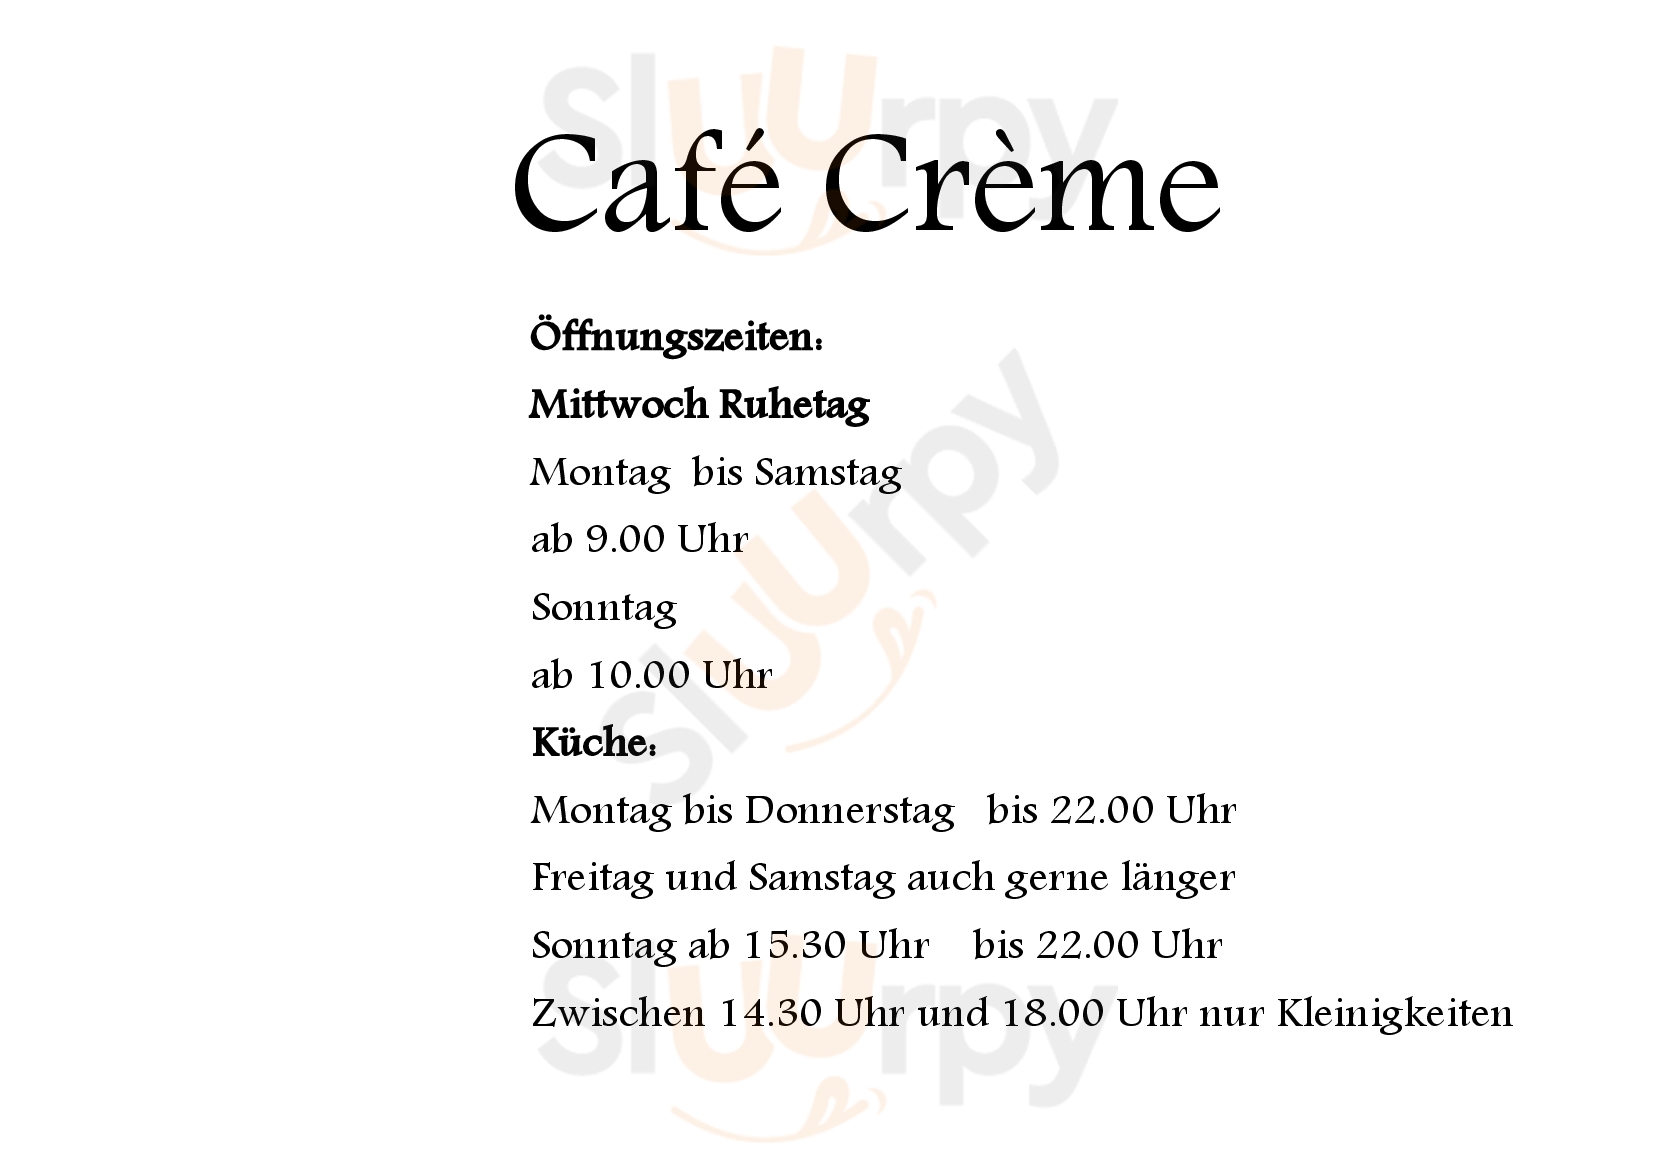 Cafe Creme Wuppertal Menu - 1